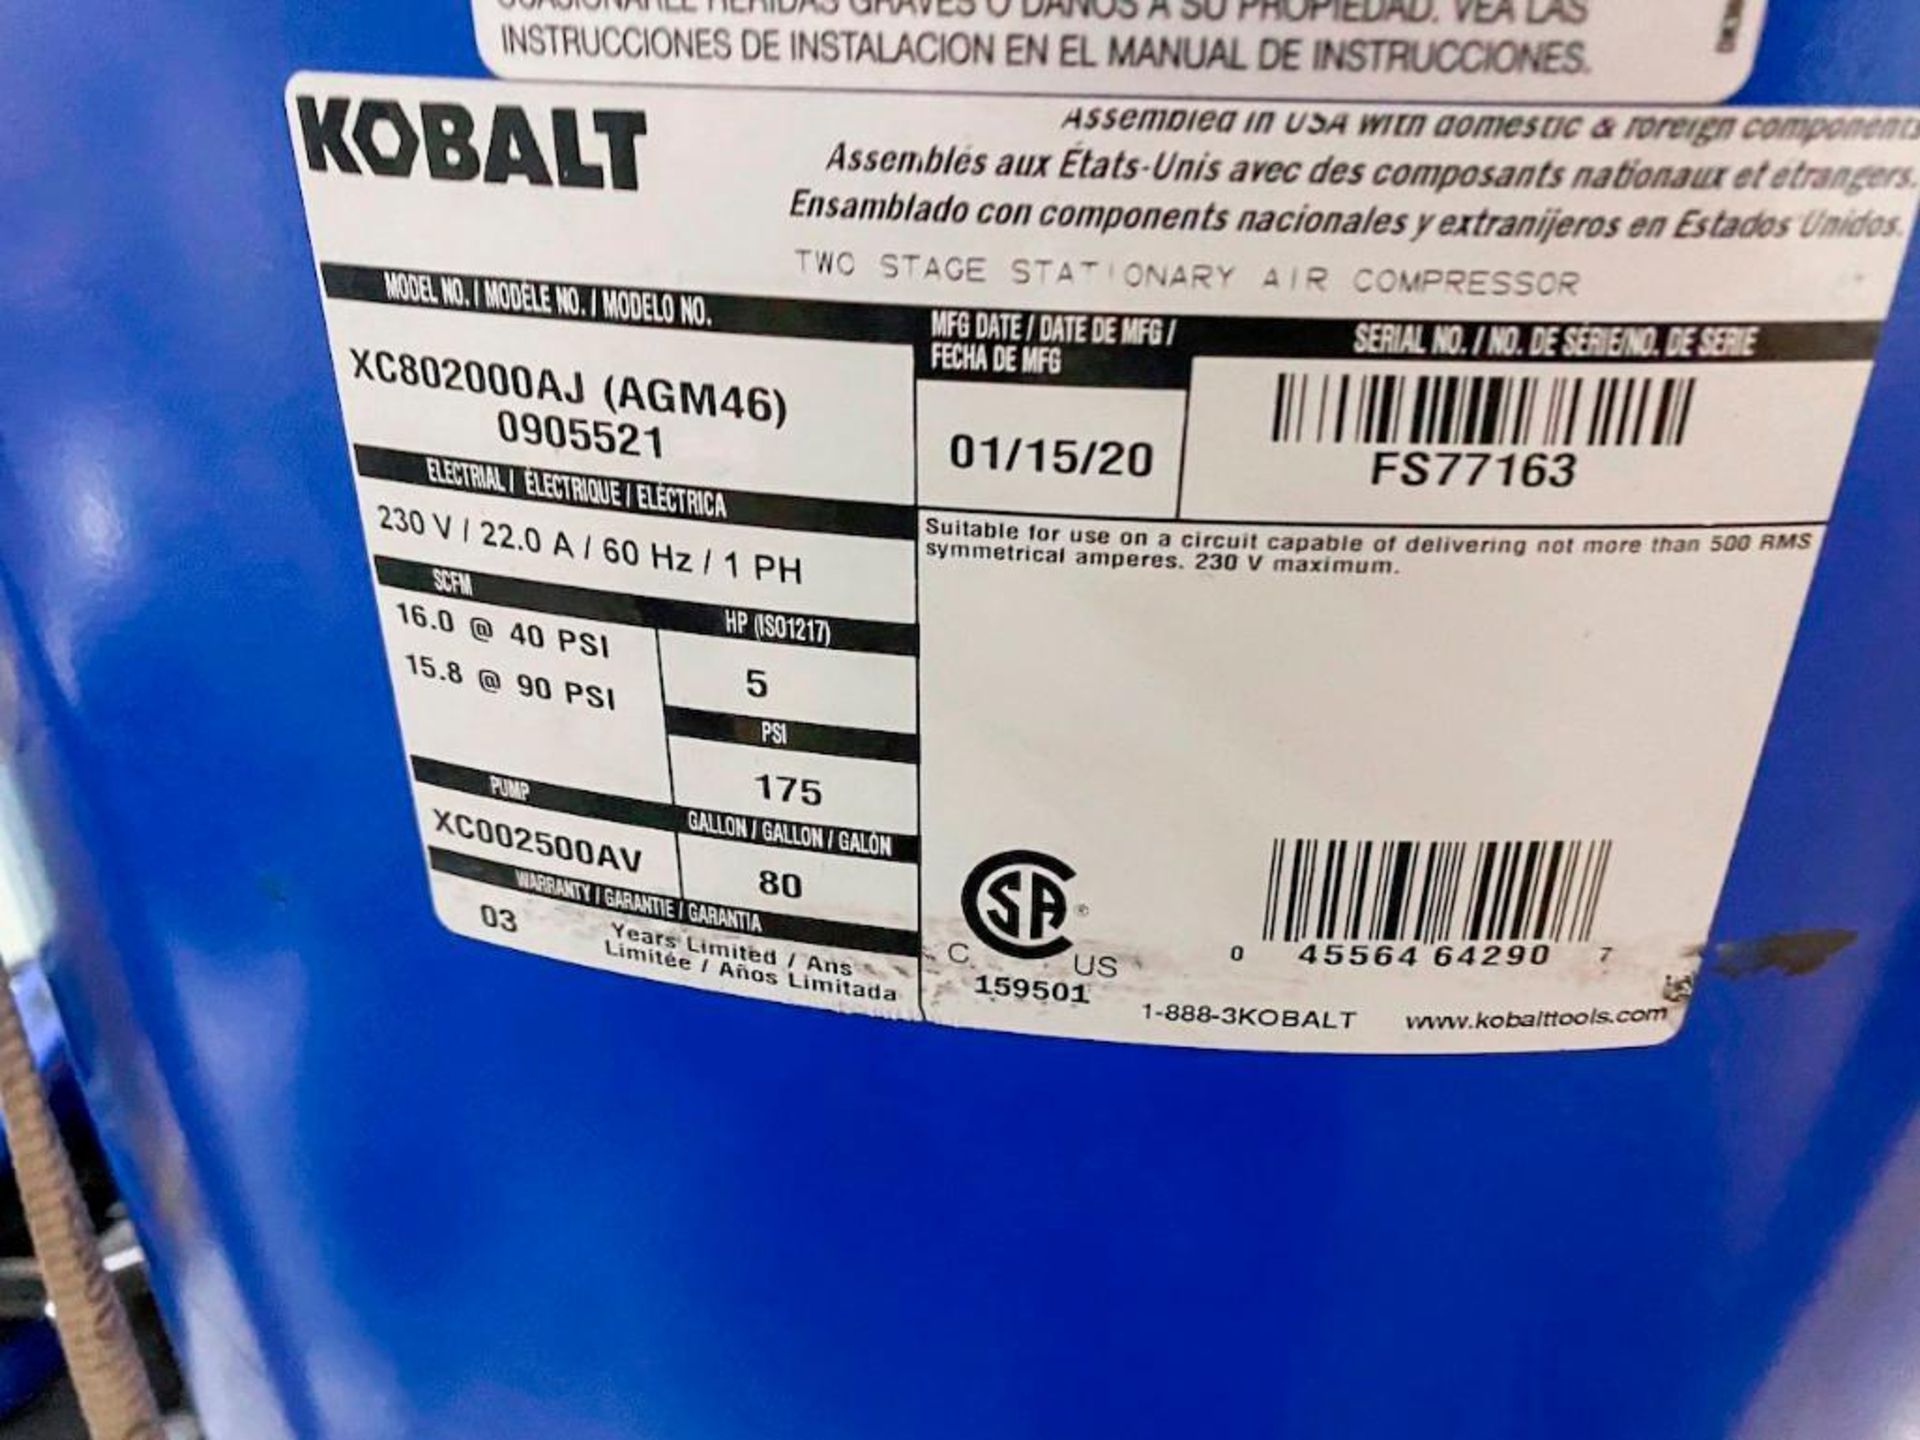 Kobalt Air Compressor 80 gal - Image 2 of 3